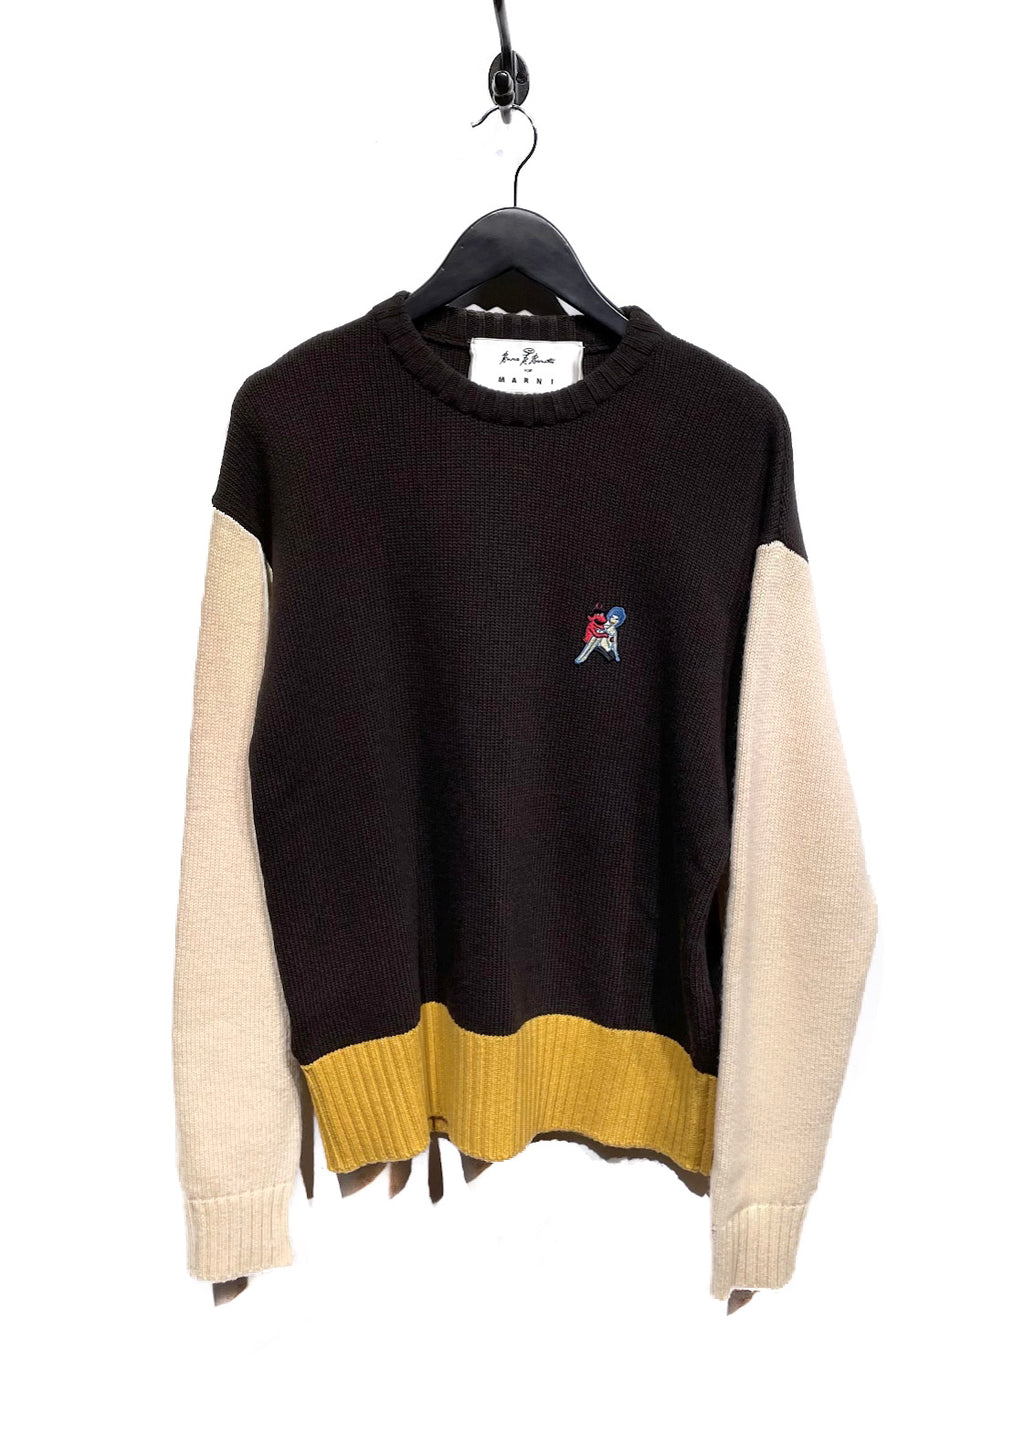 Marni X Bruno Bozzetto Brown Wool Colorblock Embroidered Sweater